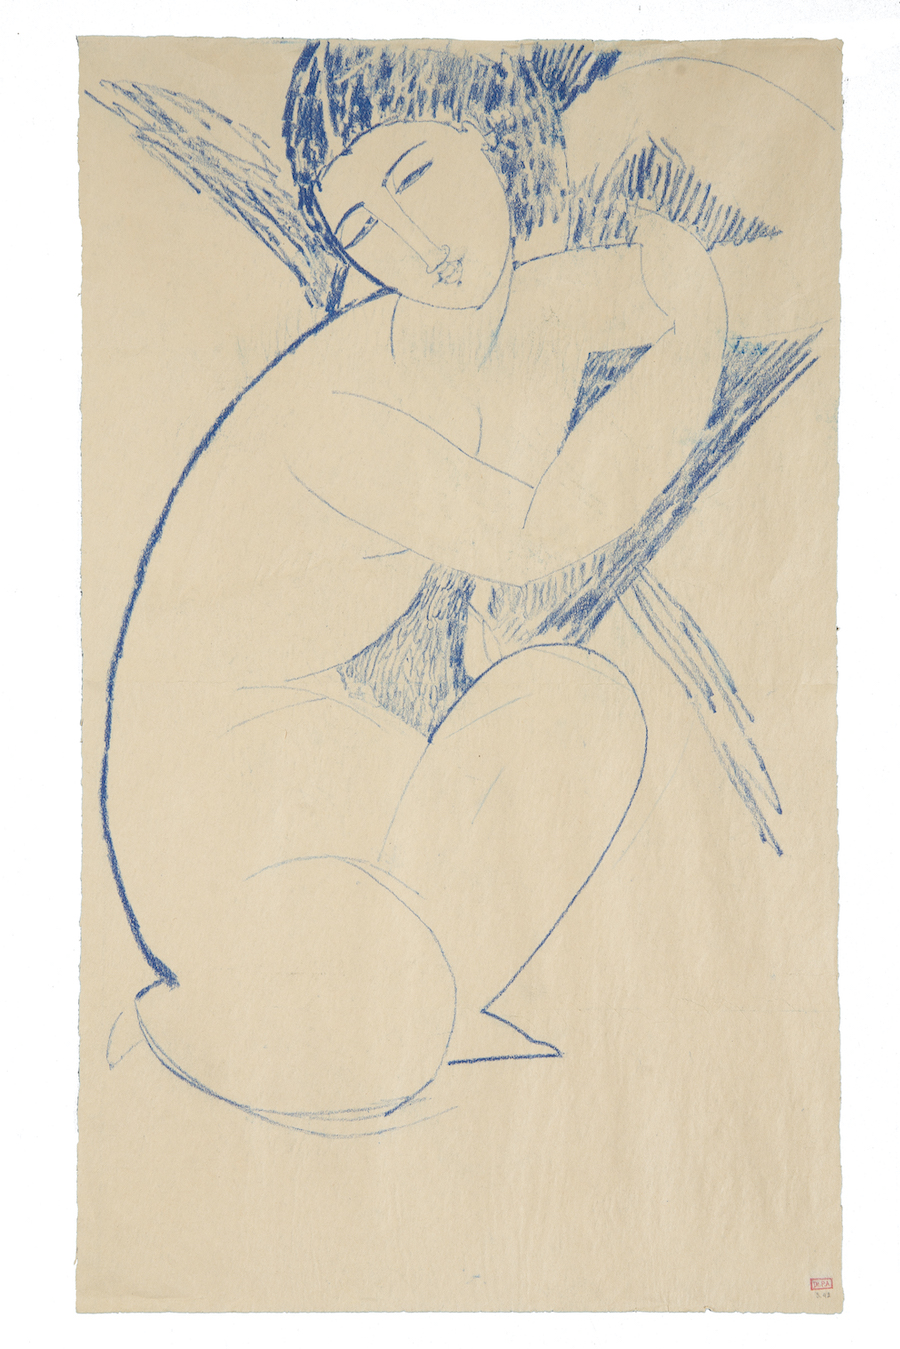 Amedeo MODIGLIANI (1884-1920), Nu accroupi, 1909, Blue pencil on paper